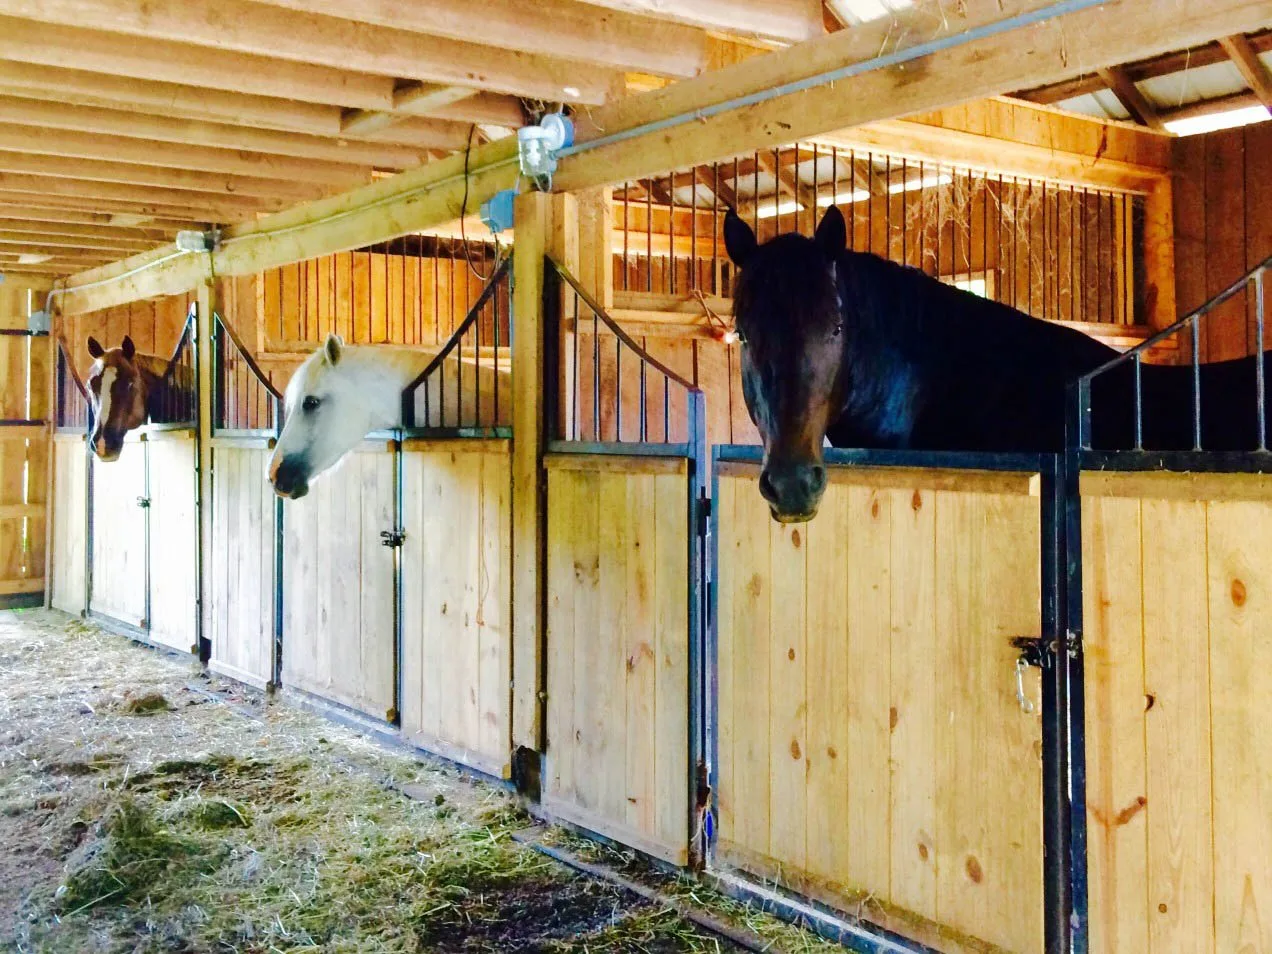 horses in stalls in a boarding barn.